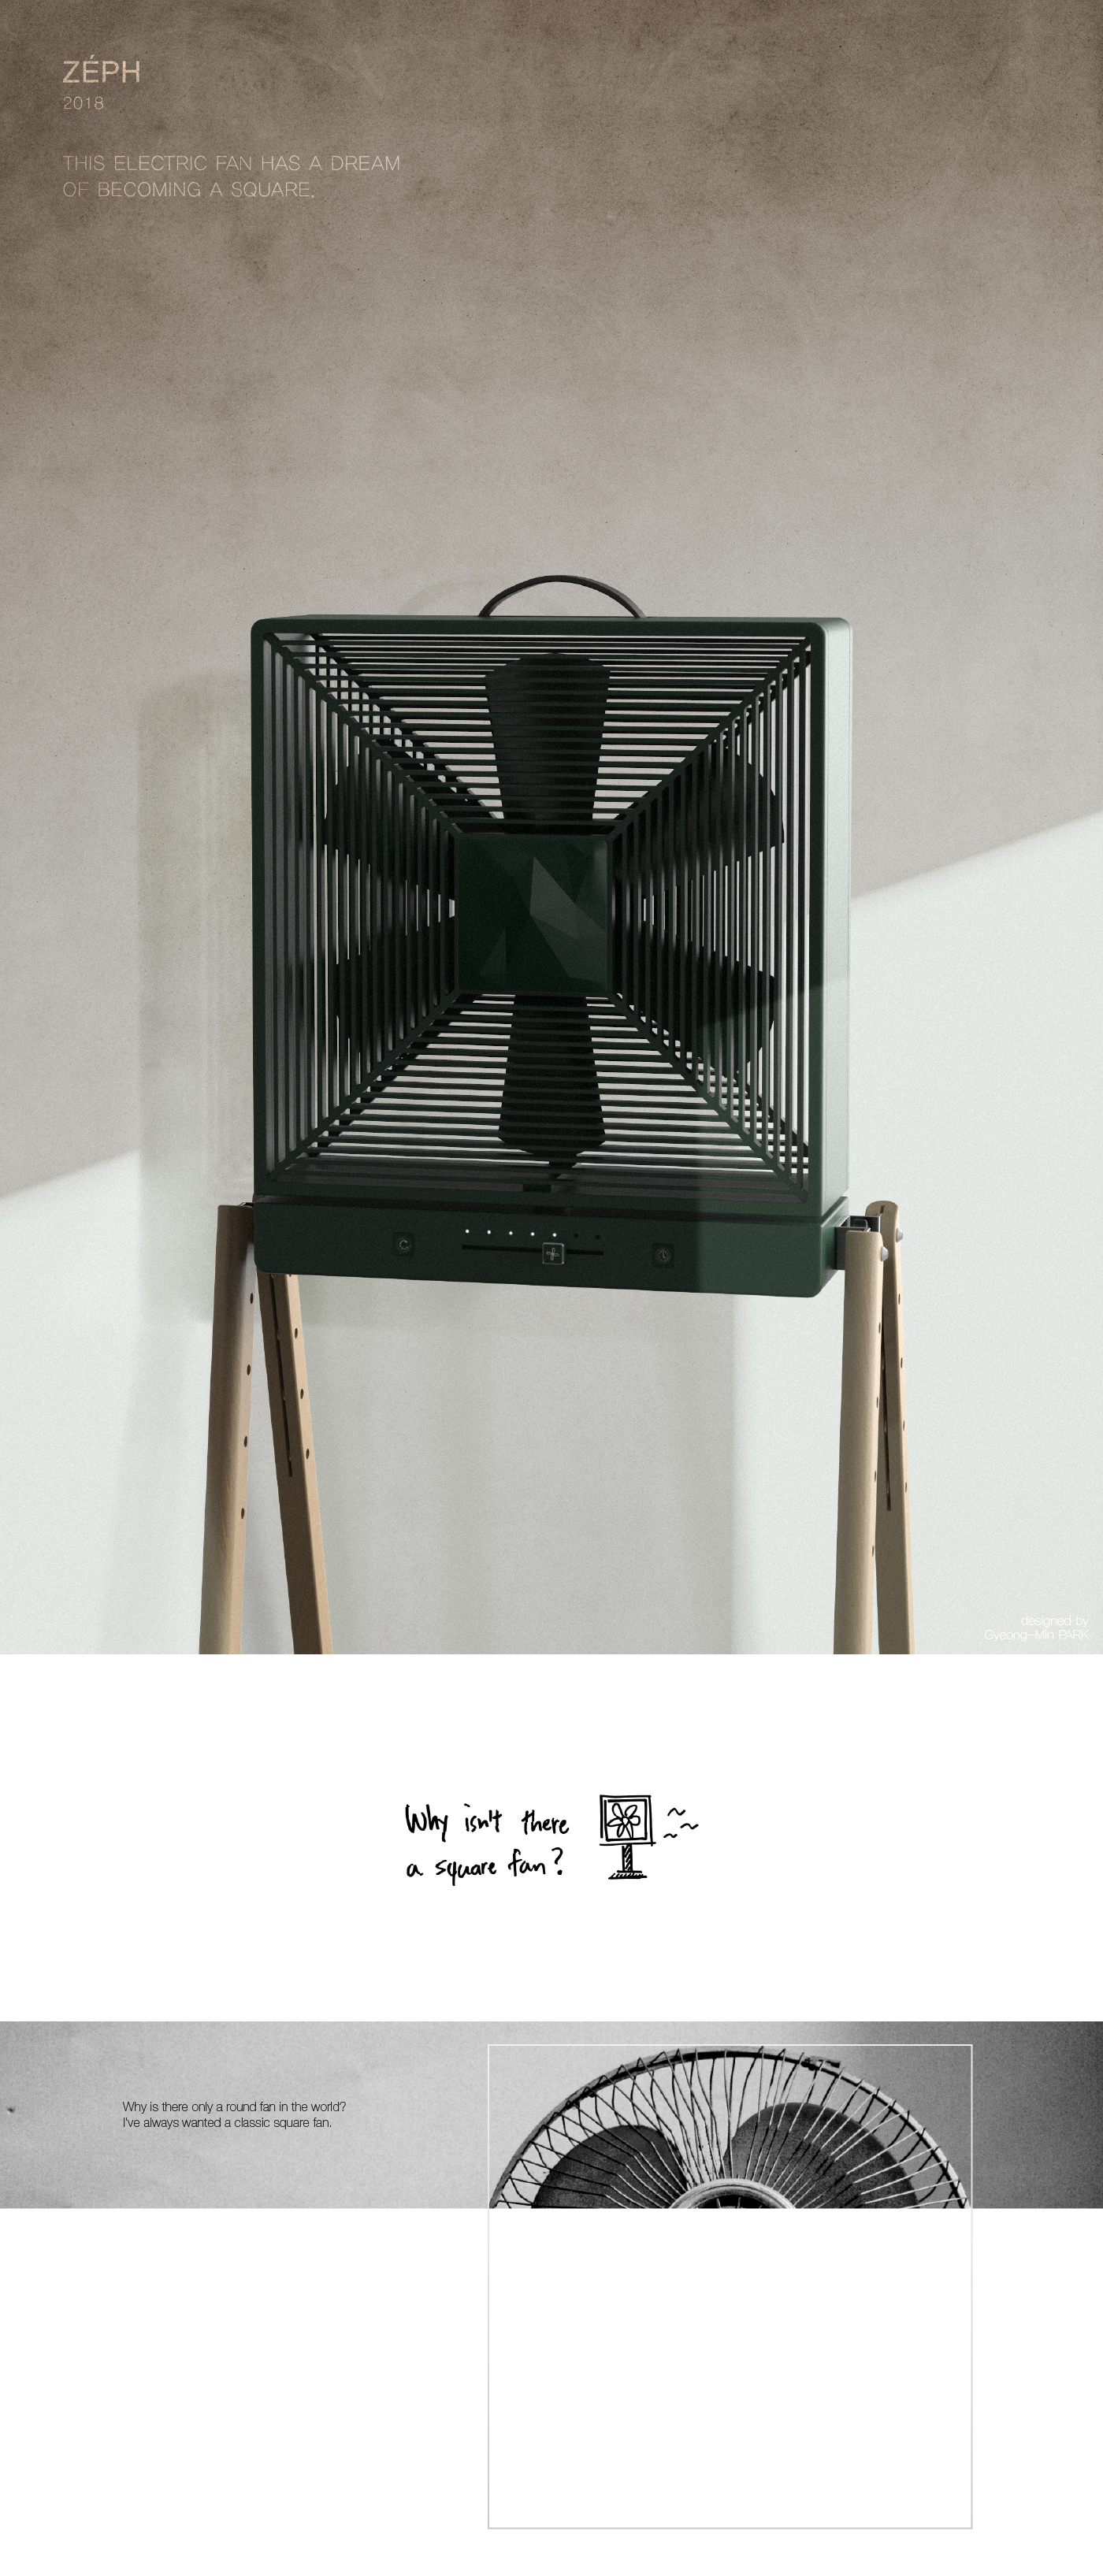 zeph electric fan fan product furniture device air circulator Interior living gyeong min